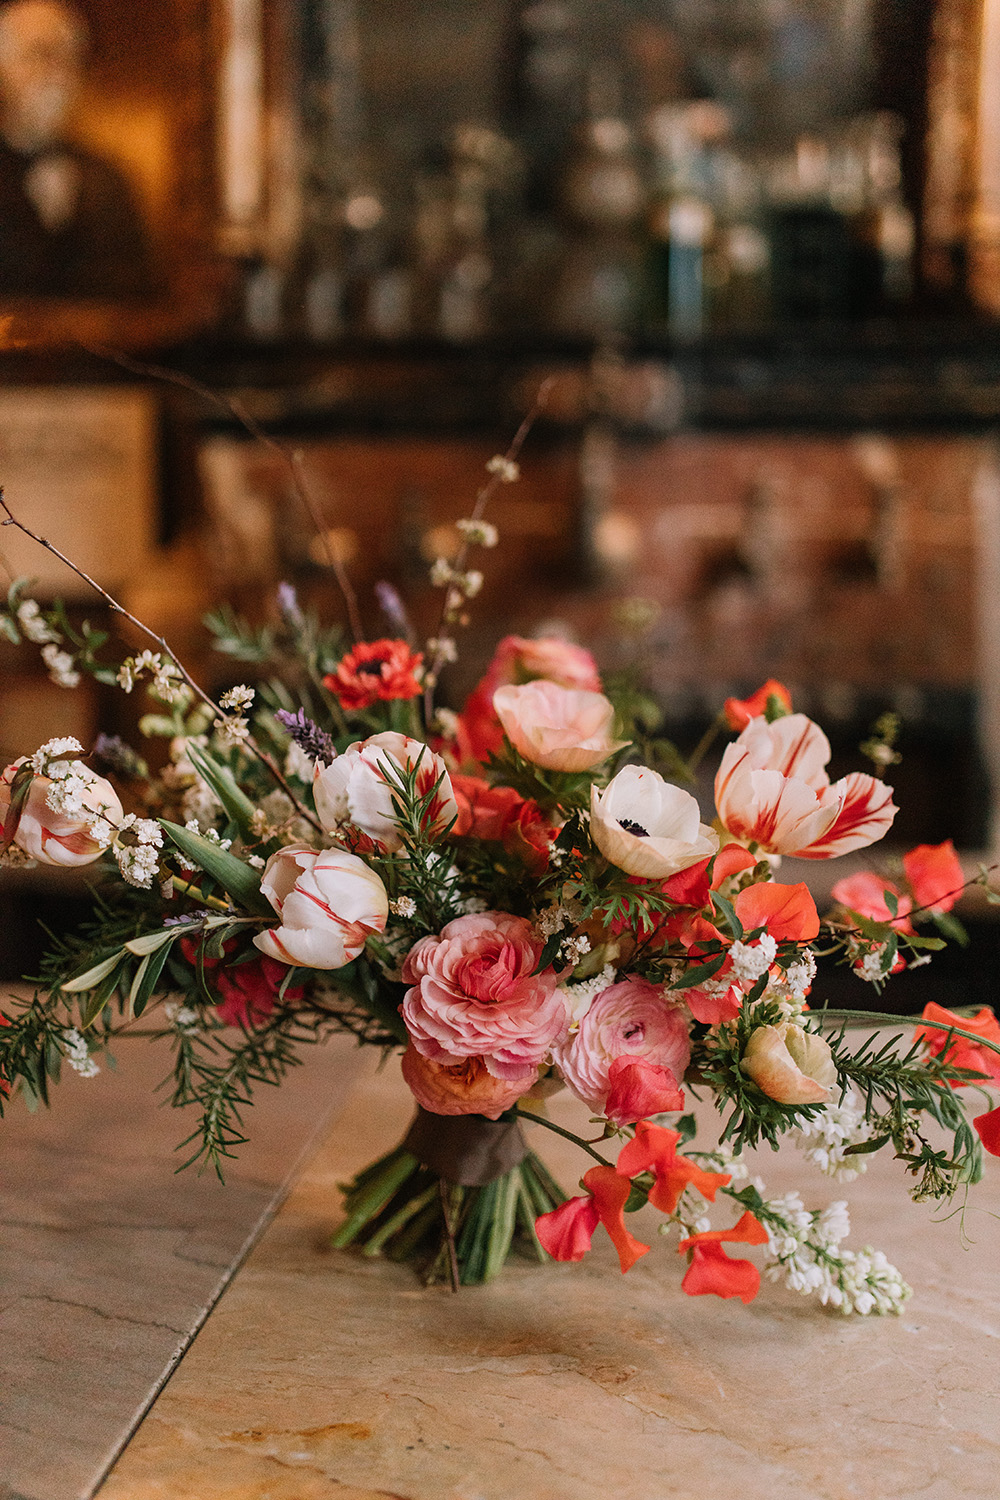 Del's stunning hand tied bridal bouquet by Pistil and Stamen. Photo: Ashley Biltz